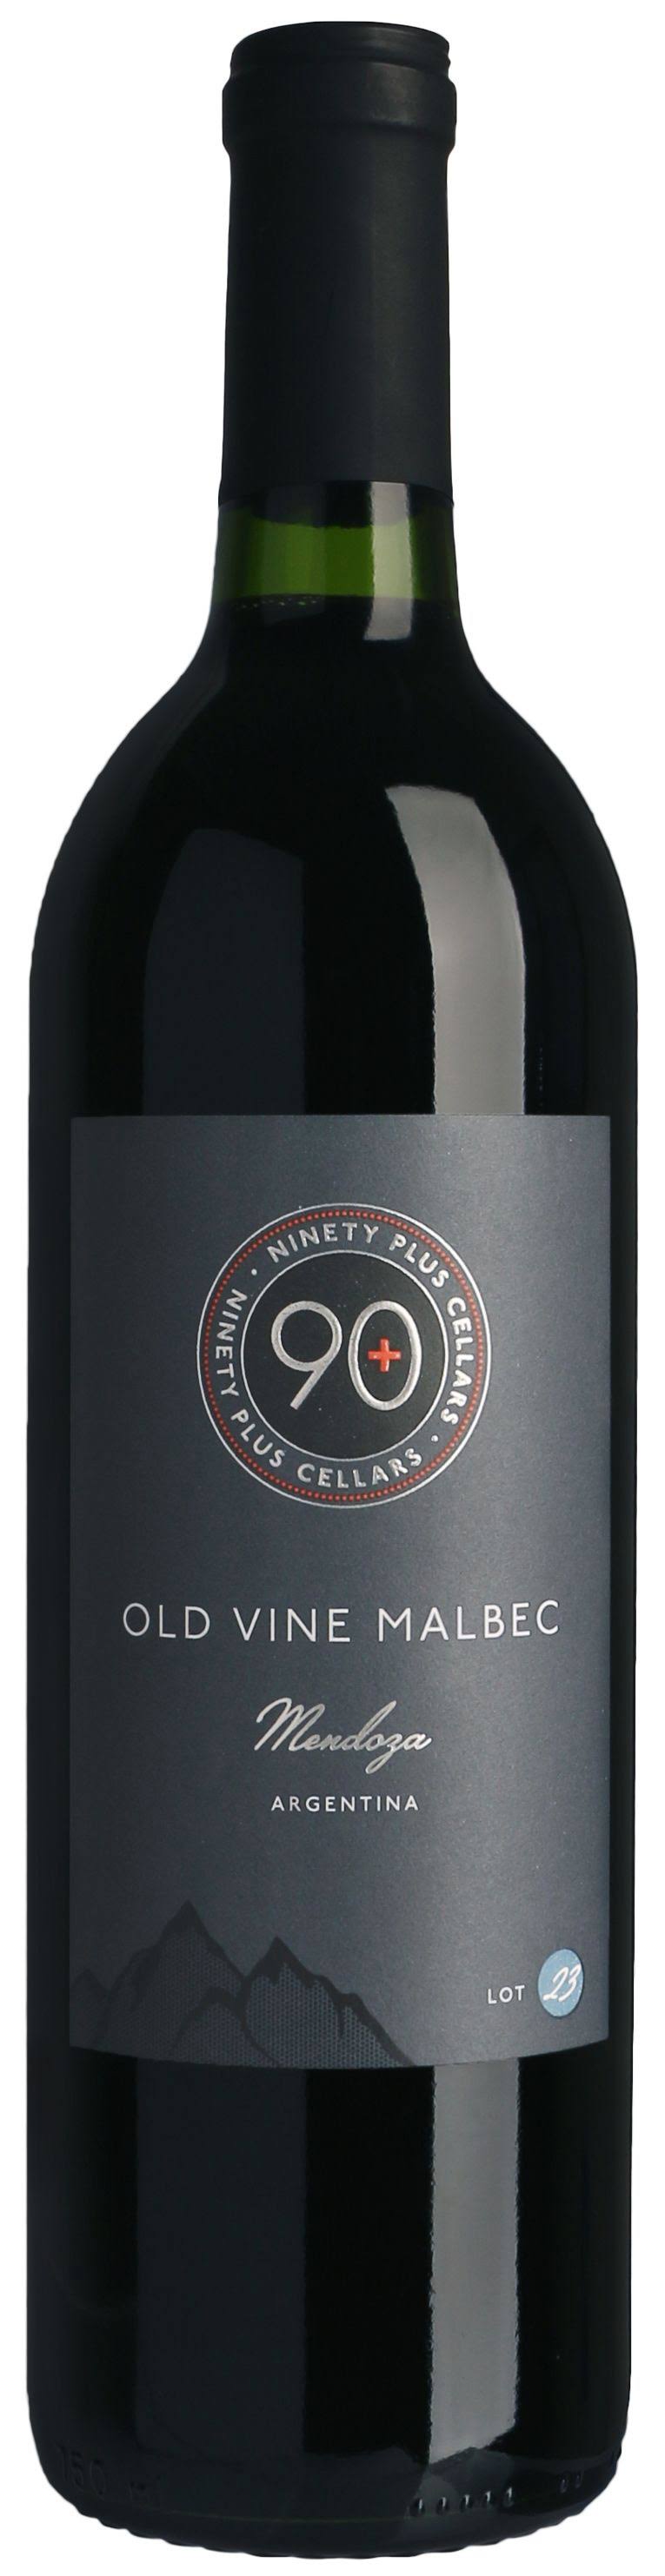 90+ Cellars Old Vine Malbec Lot 23 750ml